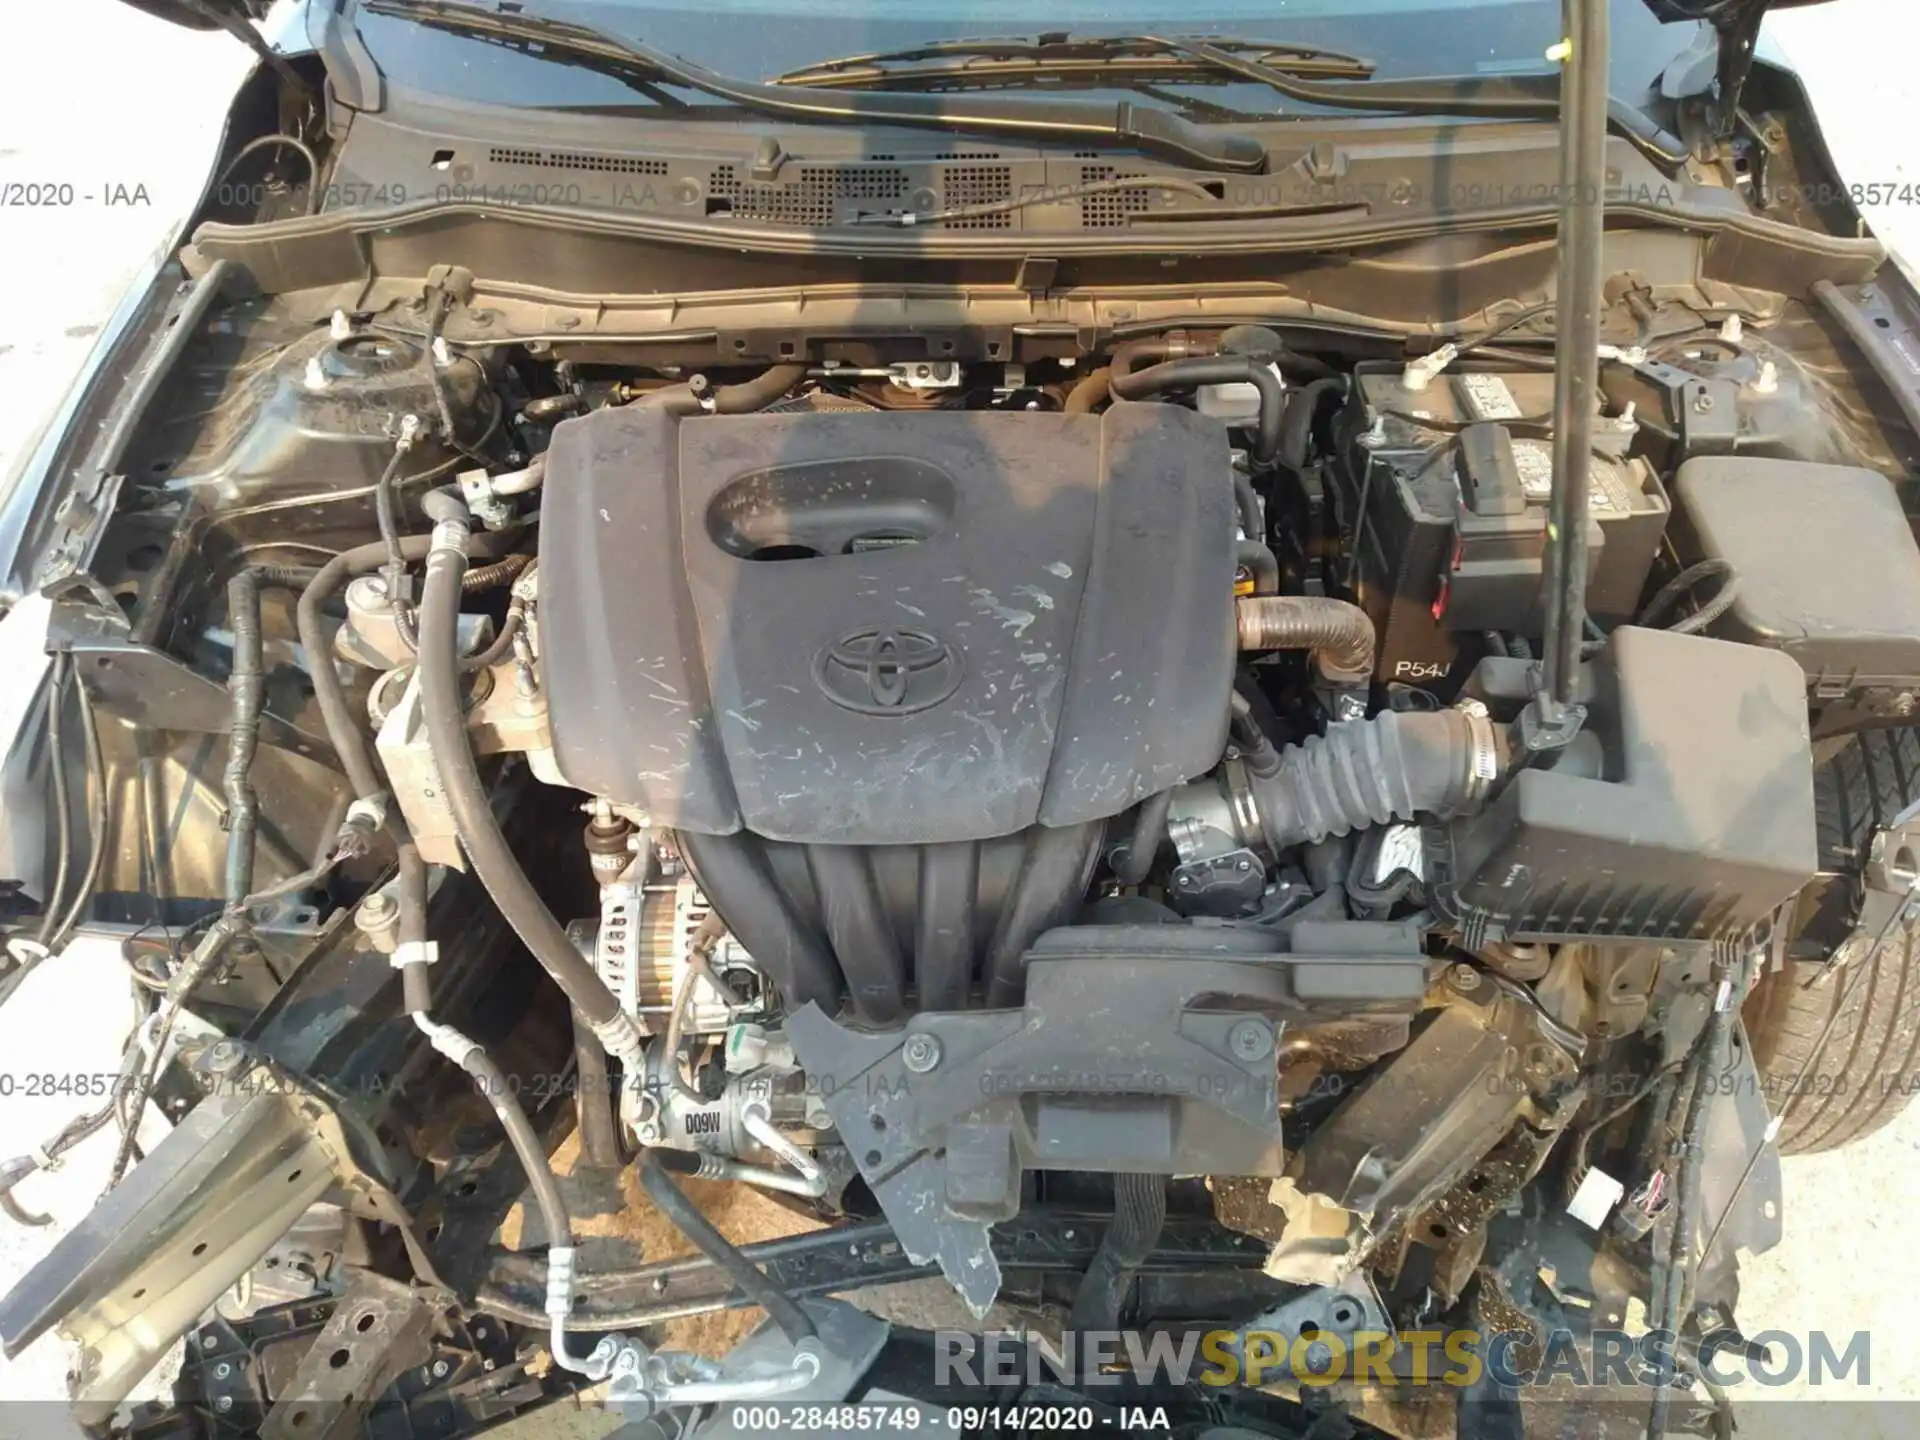 10 Photograph of a damaged car 3MYDLBJV3LY701805 TOYOTA YARIS HATCHBACK 2020